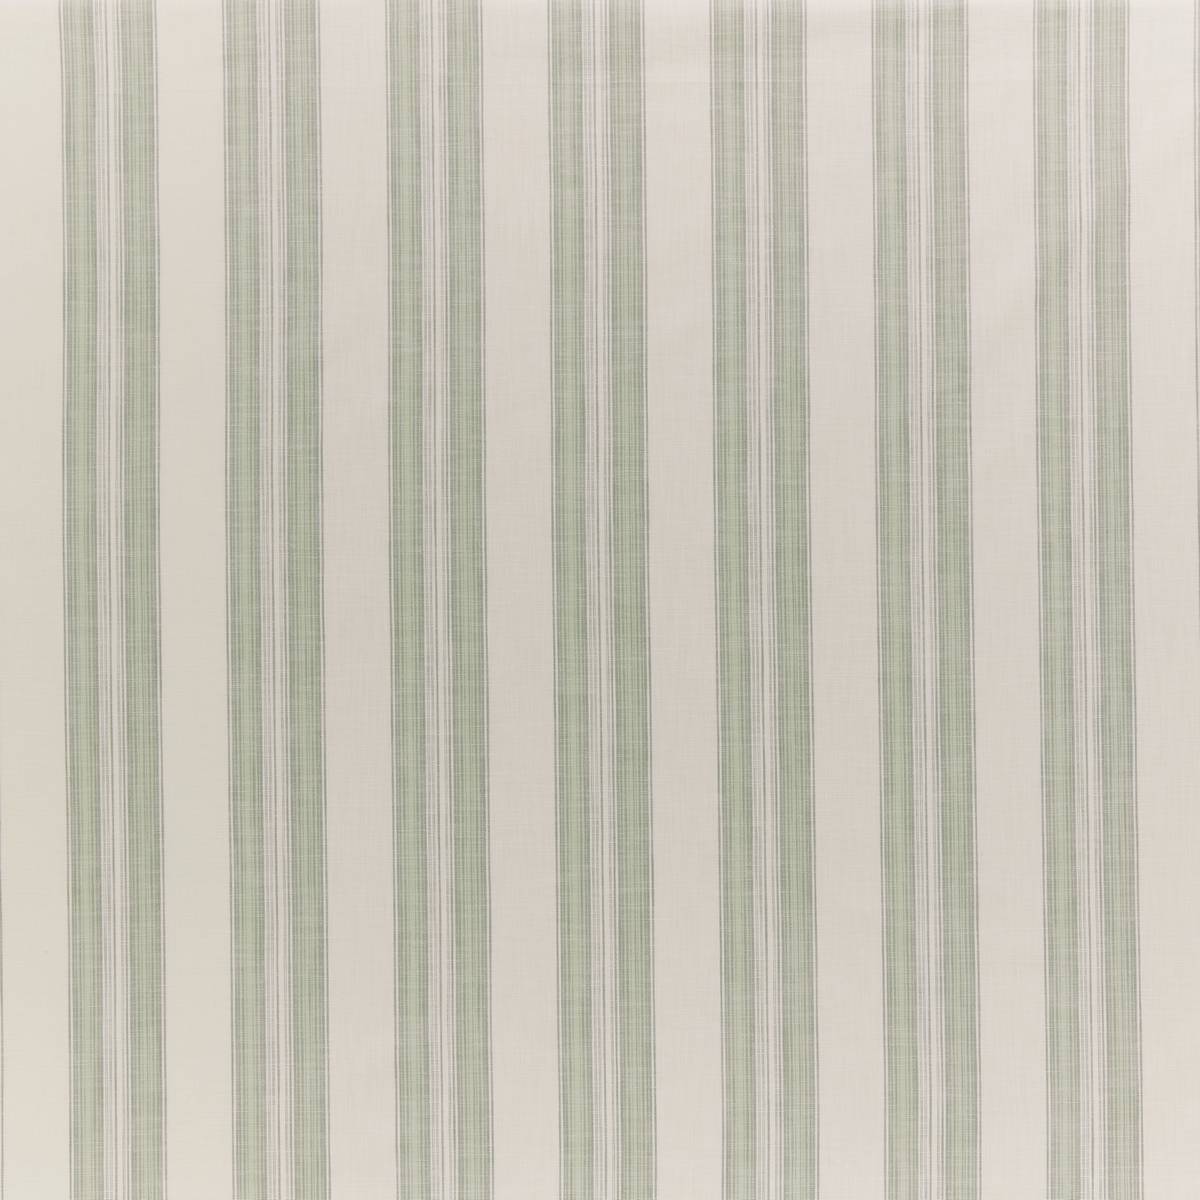 Barley Stripe Mint Fabric by iLiv